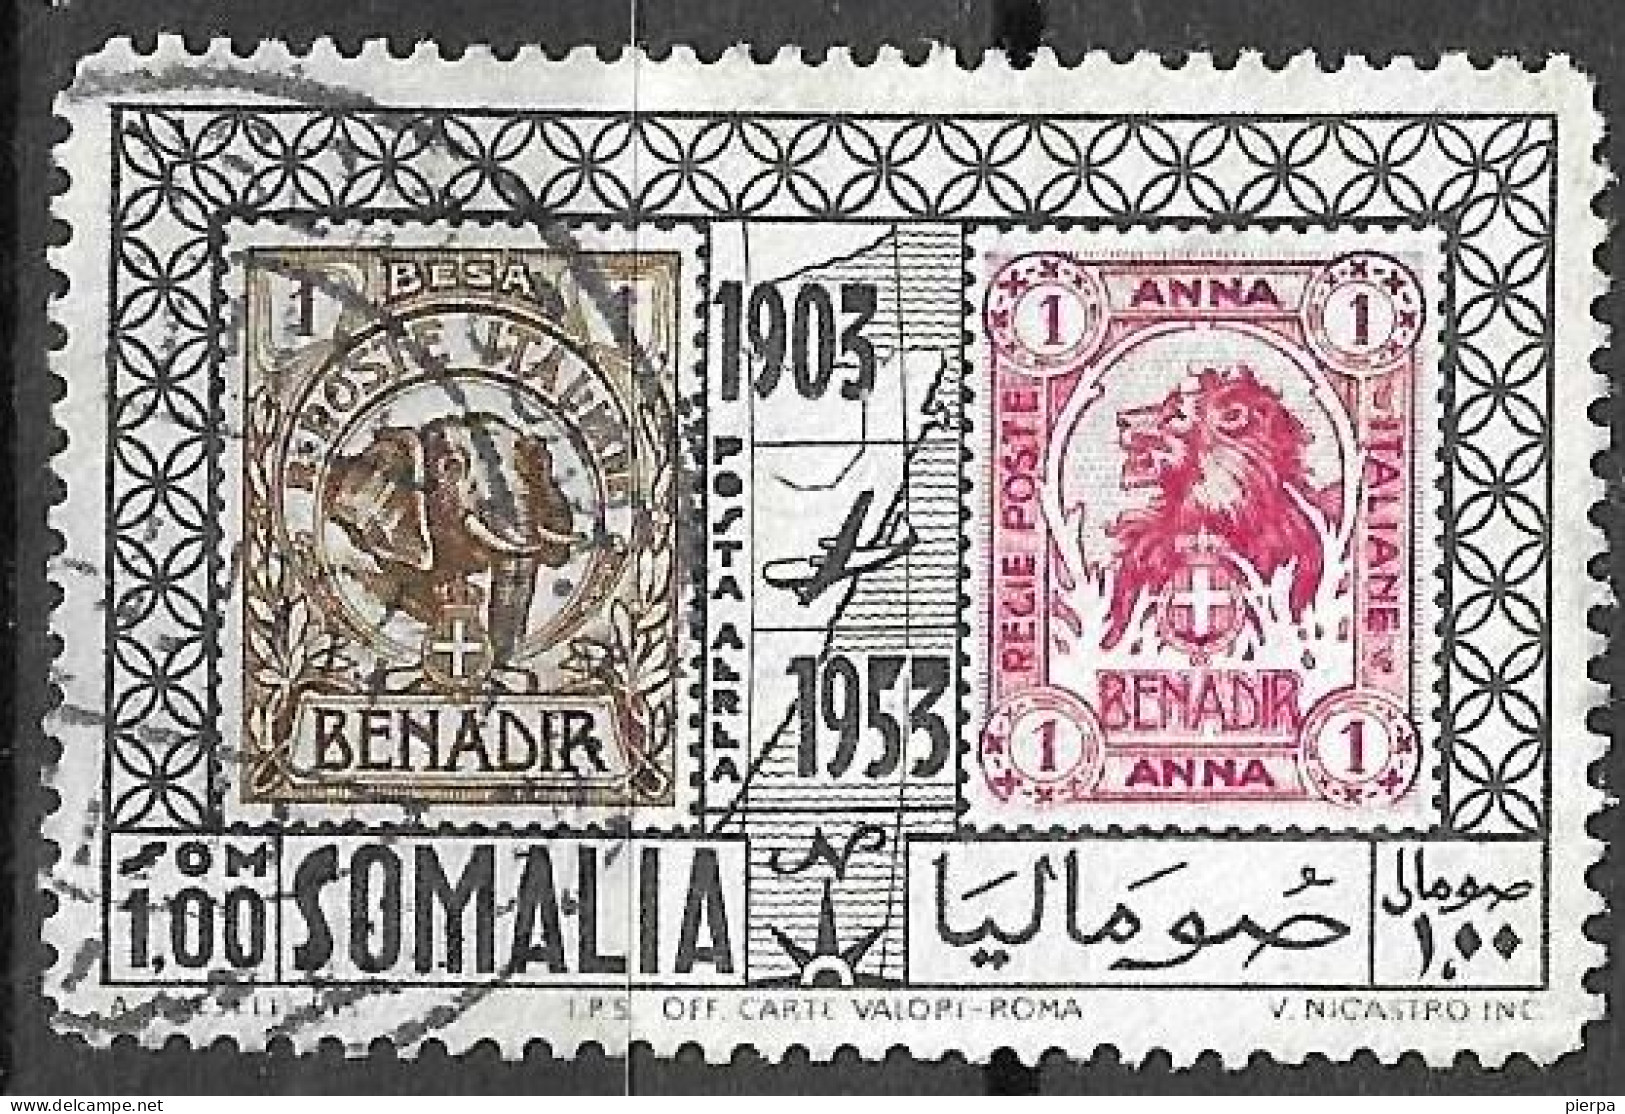 SOMALIA A.F.I.S. - 1953 - POSTA AEREA -50° FRANCOBOLLO - SOMALI 1,00 - USATO (YVERT AV 46 - MICHEL 287 - SS A 19) - Somalie (AFIS)